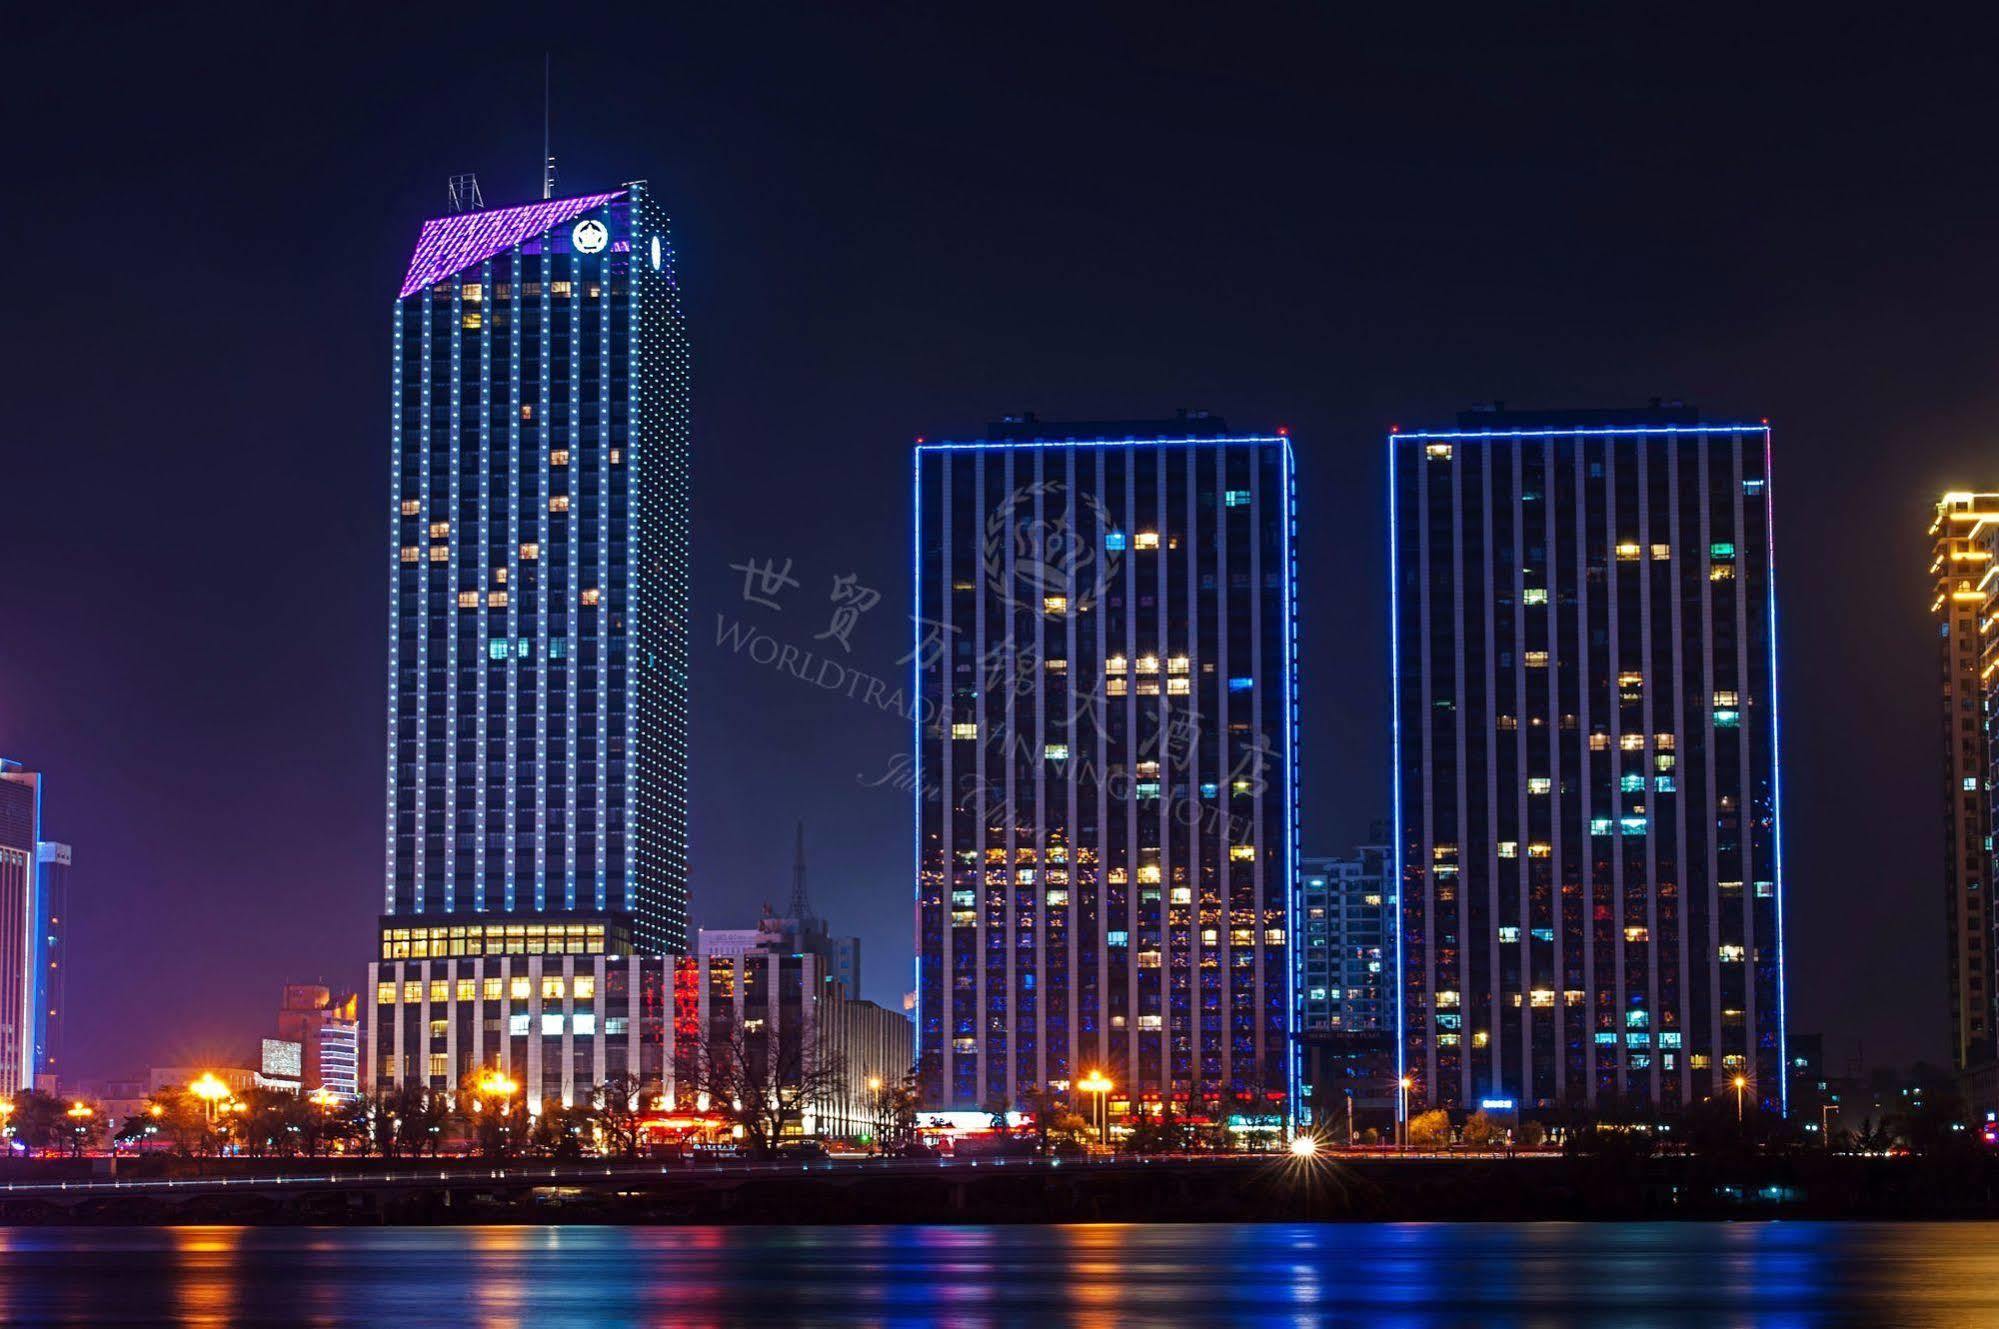 Jilin World Trade Winning Hotel المظهر الخارجي الصورة